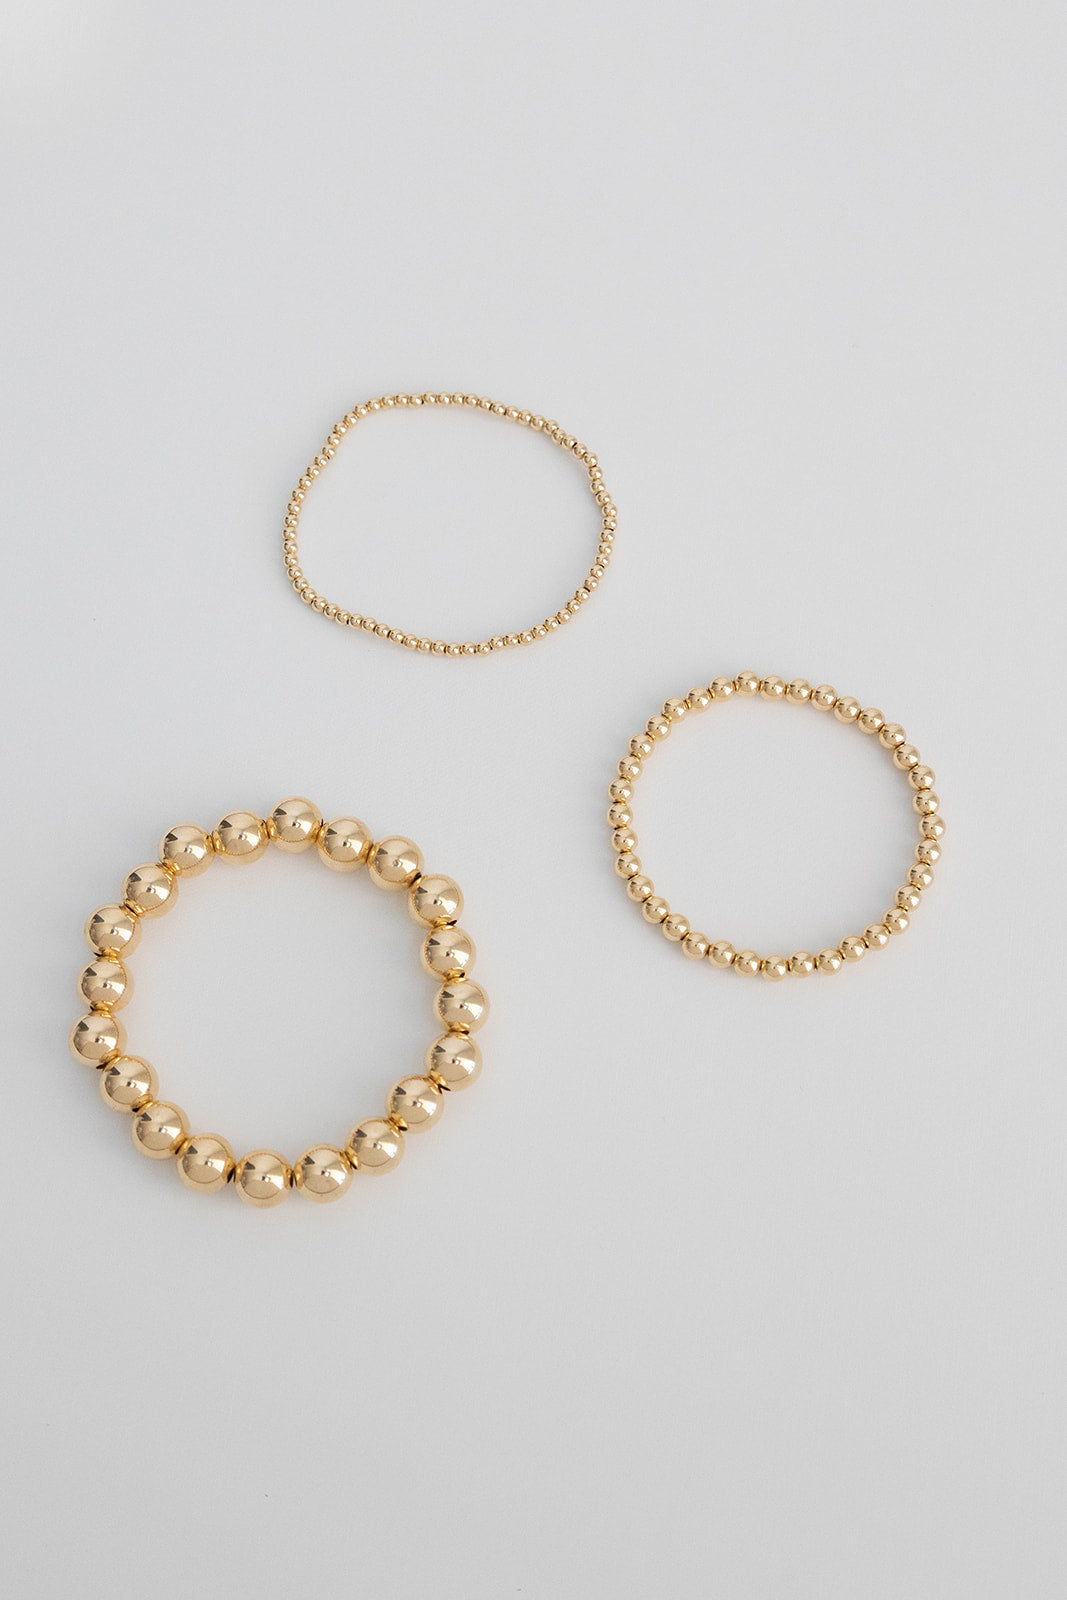 14k Gold Filled Beaded Stacking bracelet, 5mm